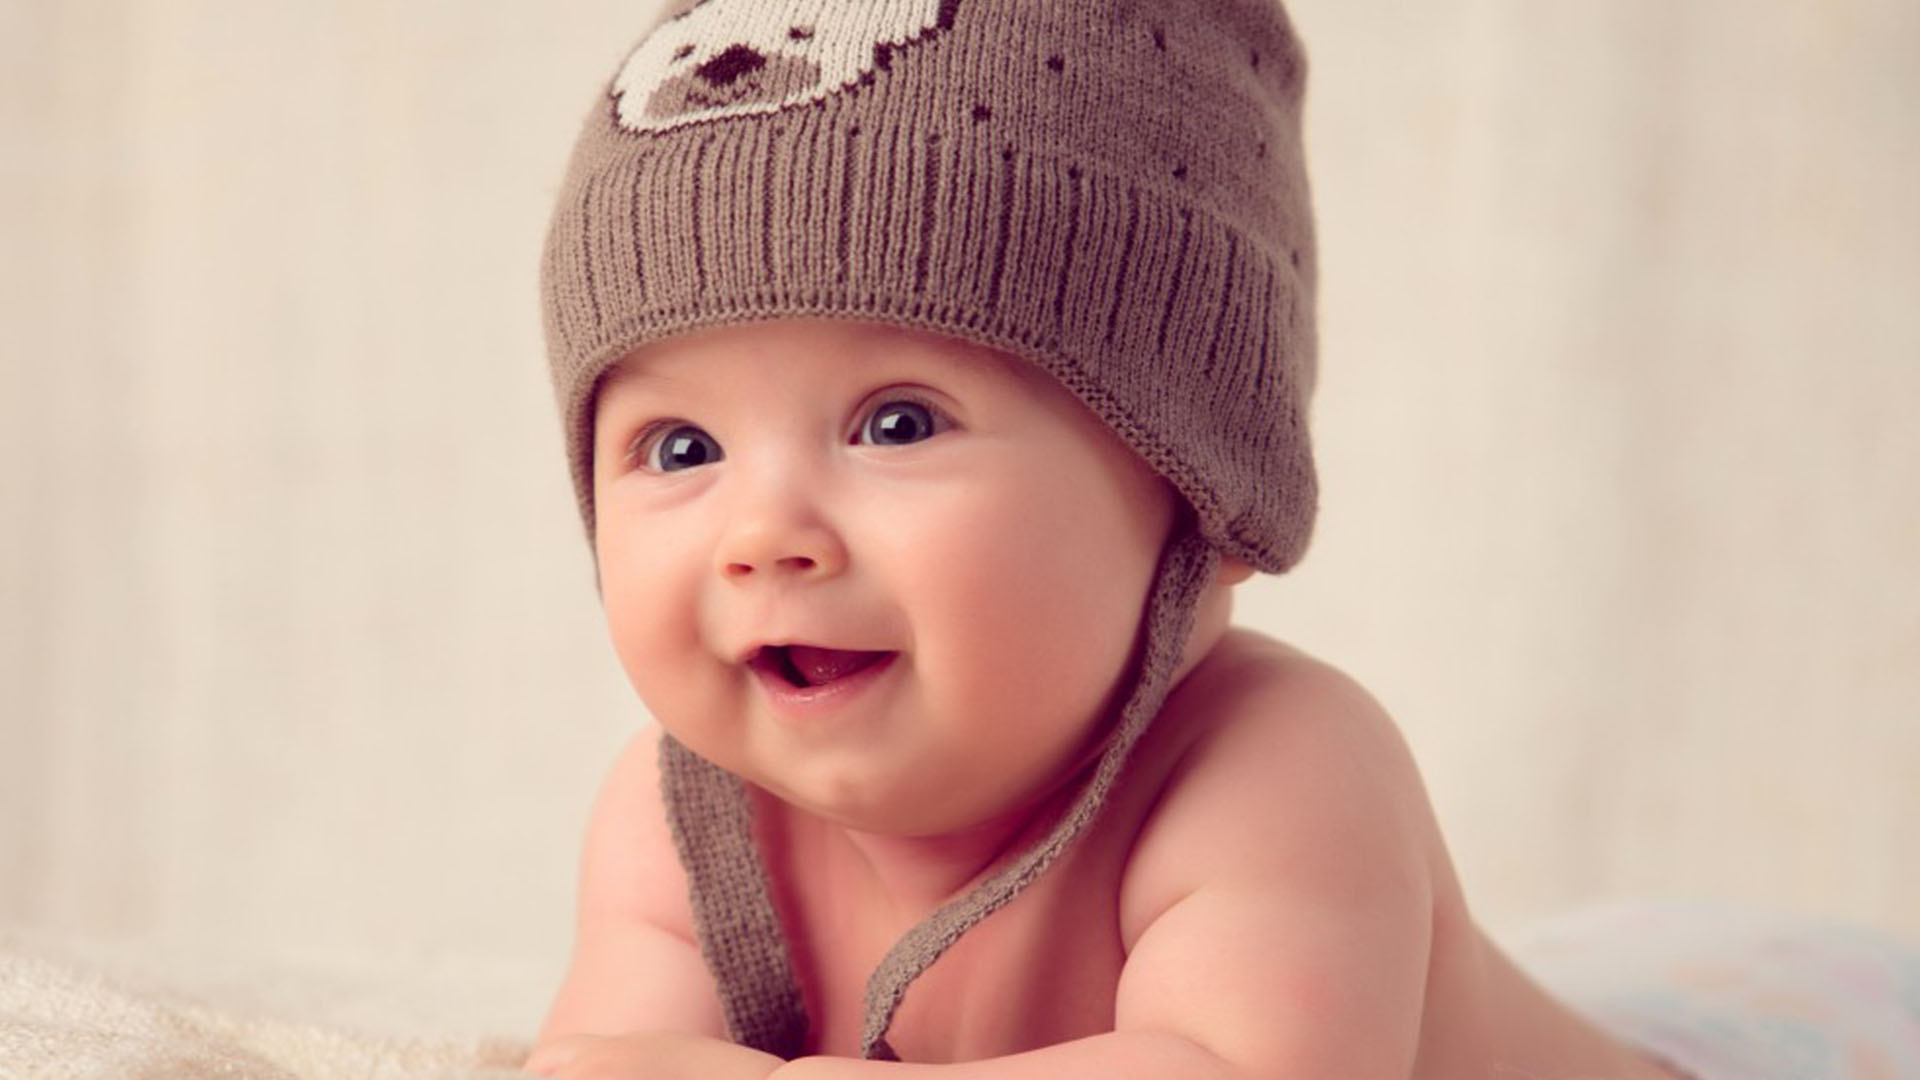 Cute Baby HD Image, Pics & Wallpaper. Cute Profile Image